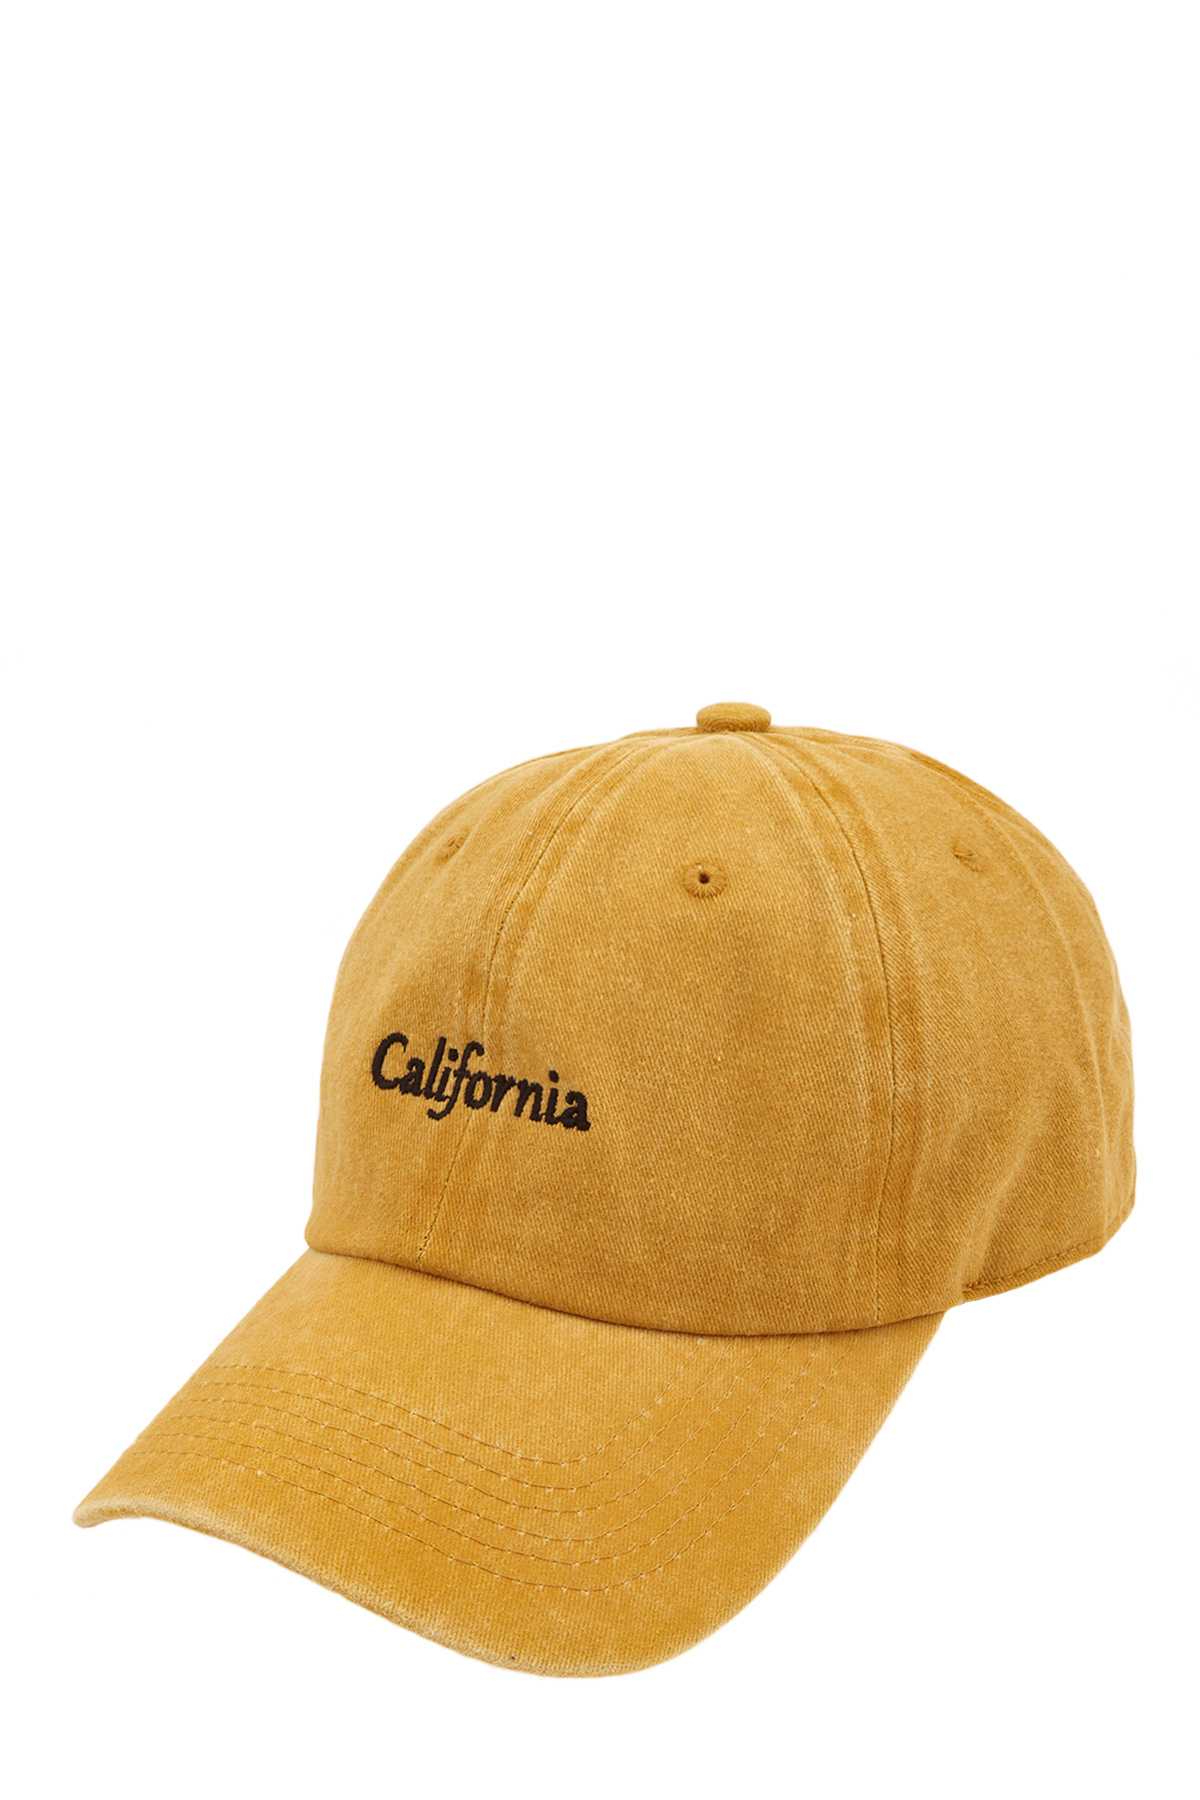 California Embroidered Faded Cap